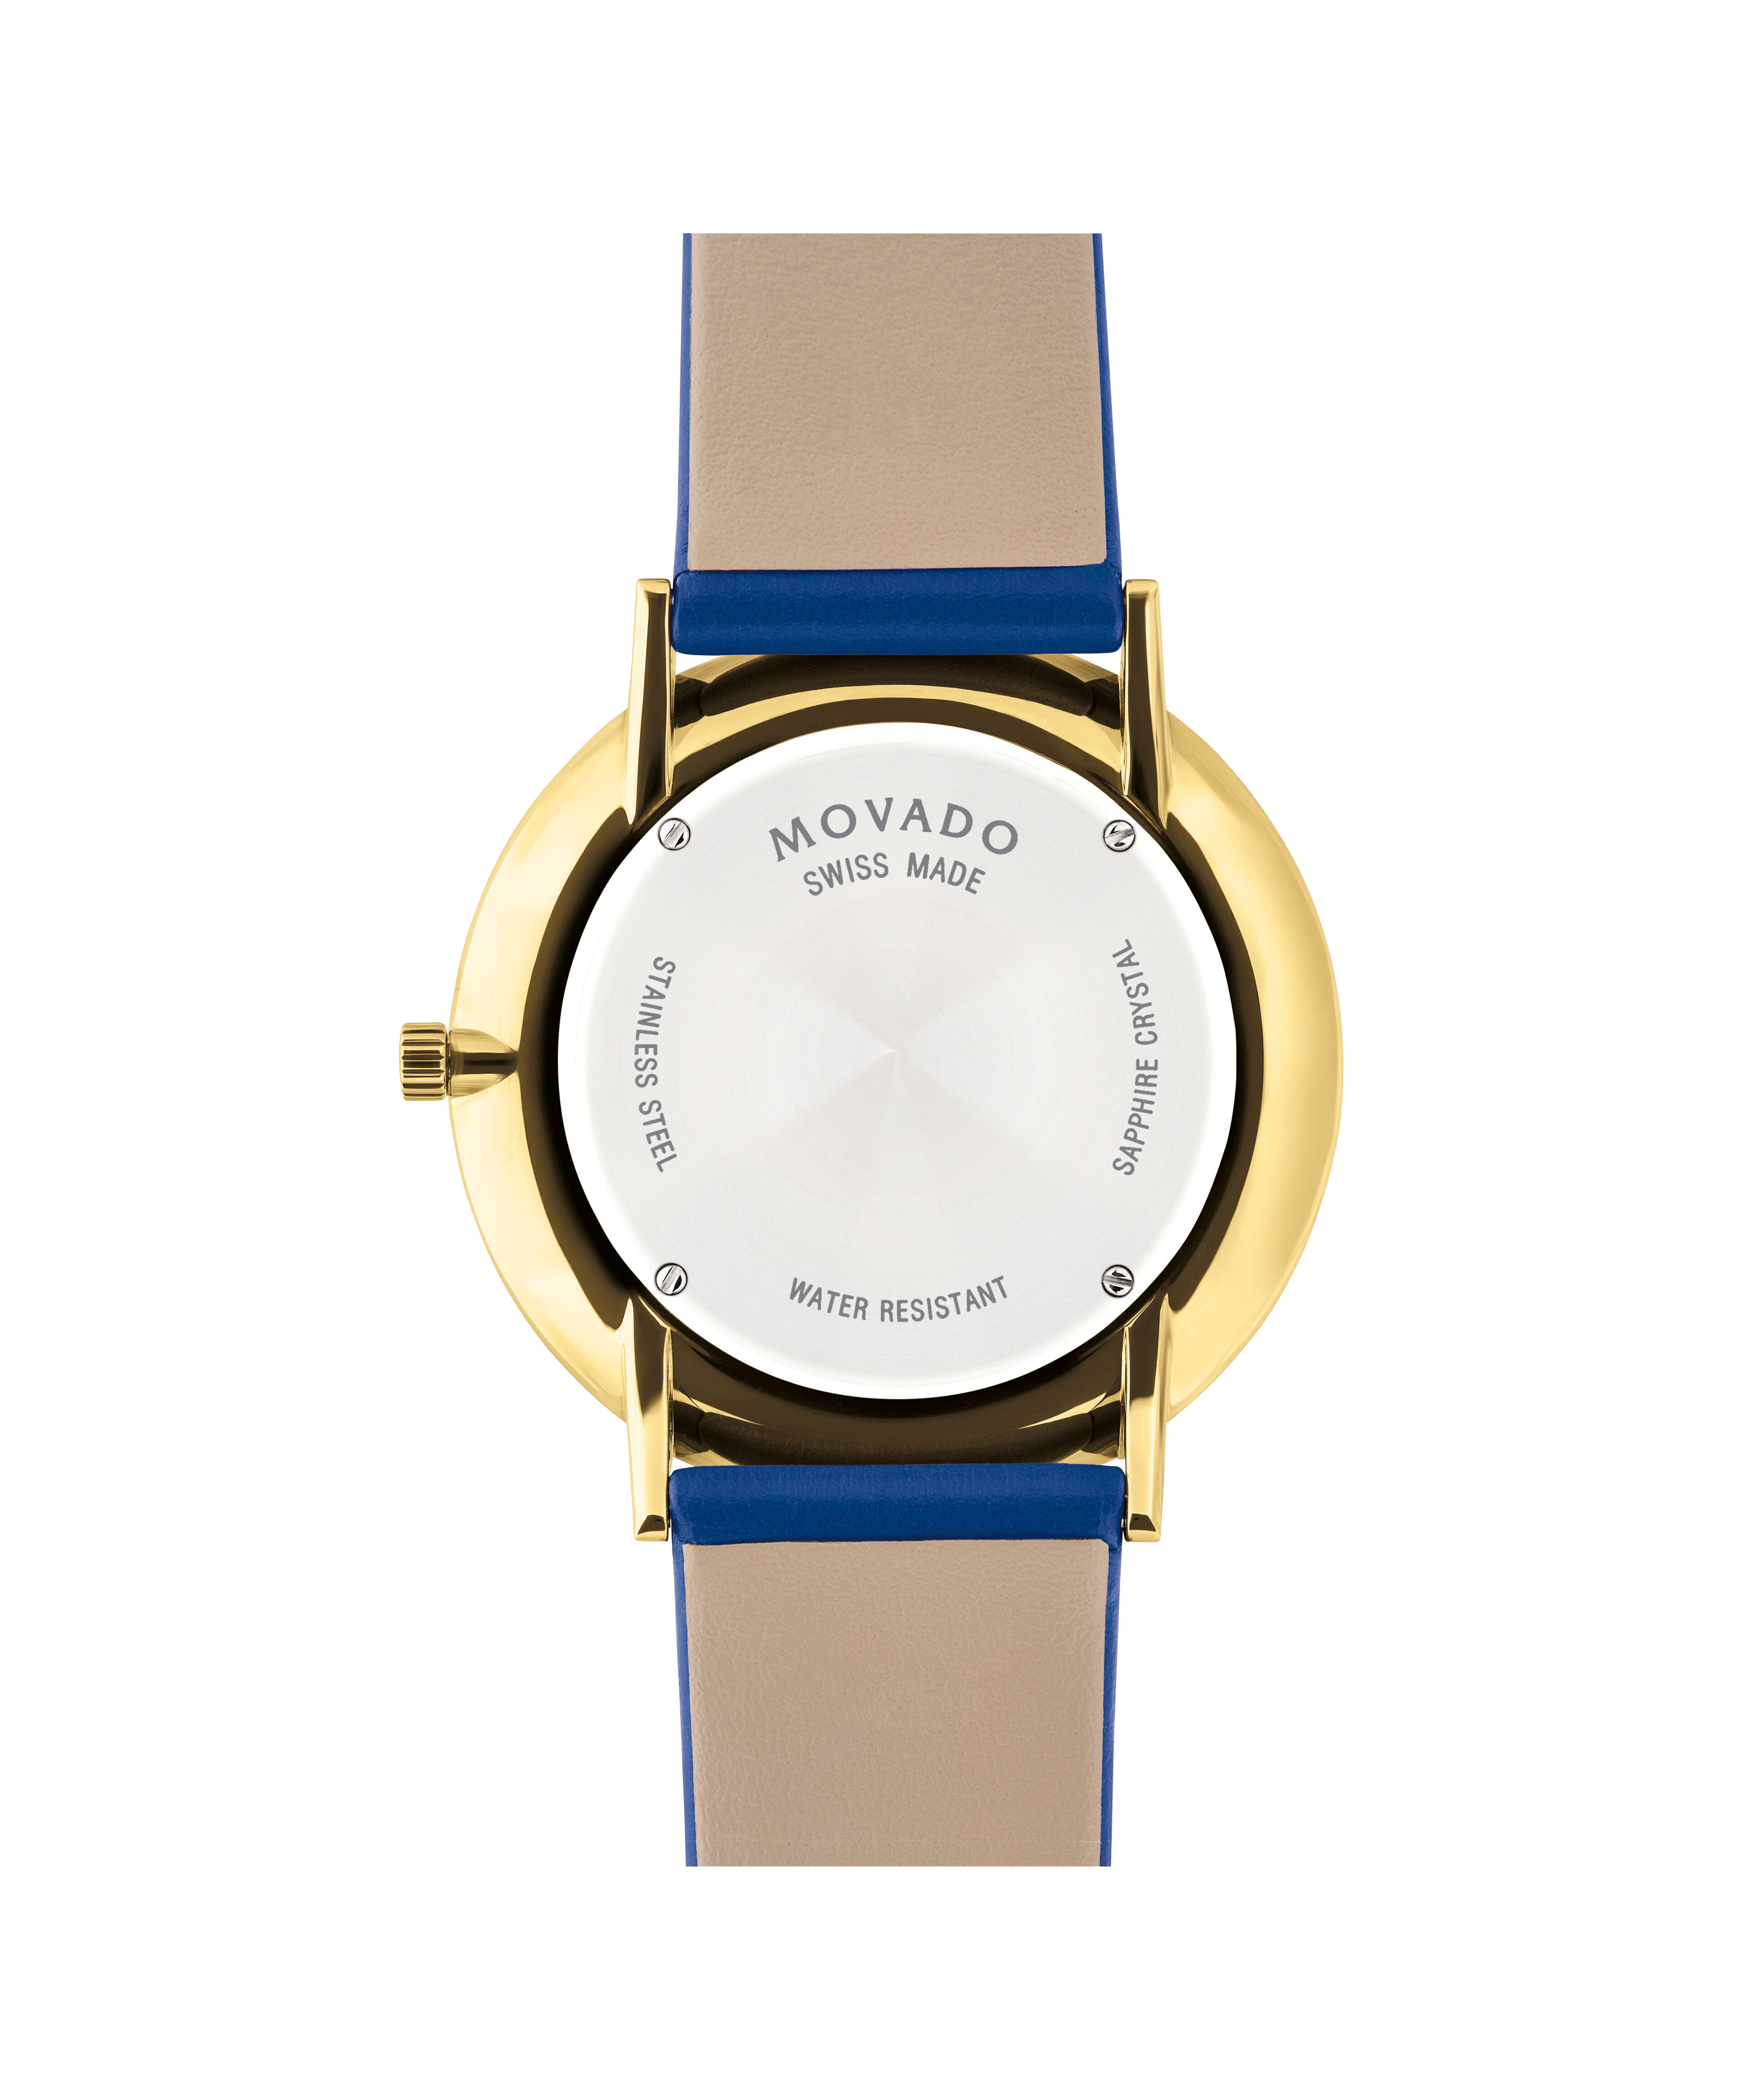 Cartier Rose Gold Watch Replica